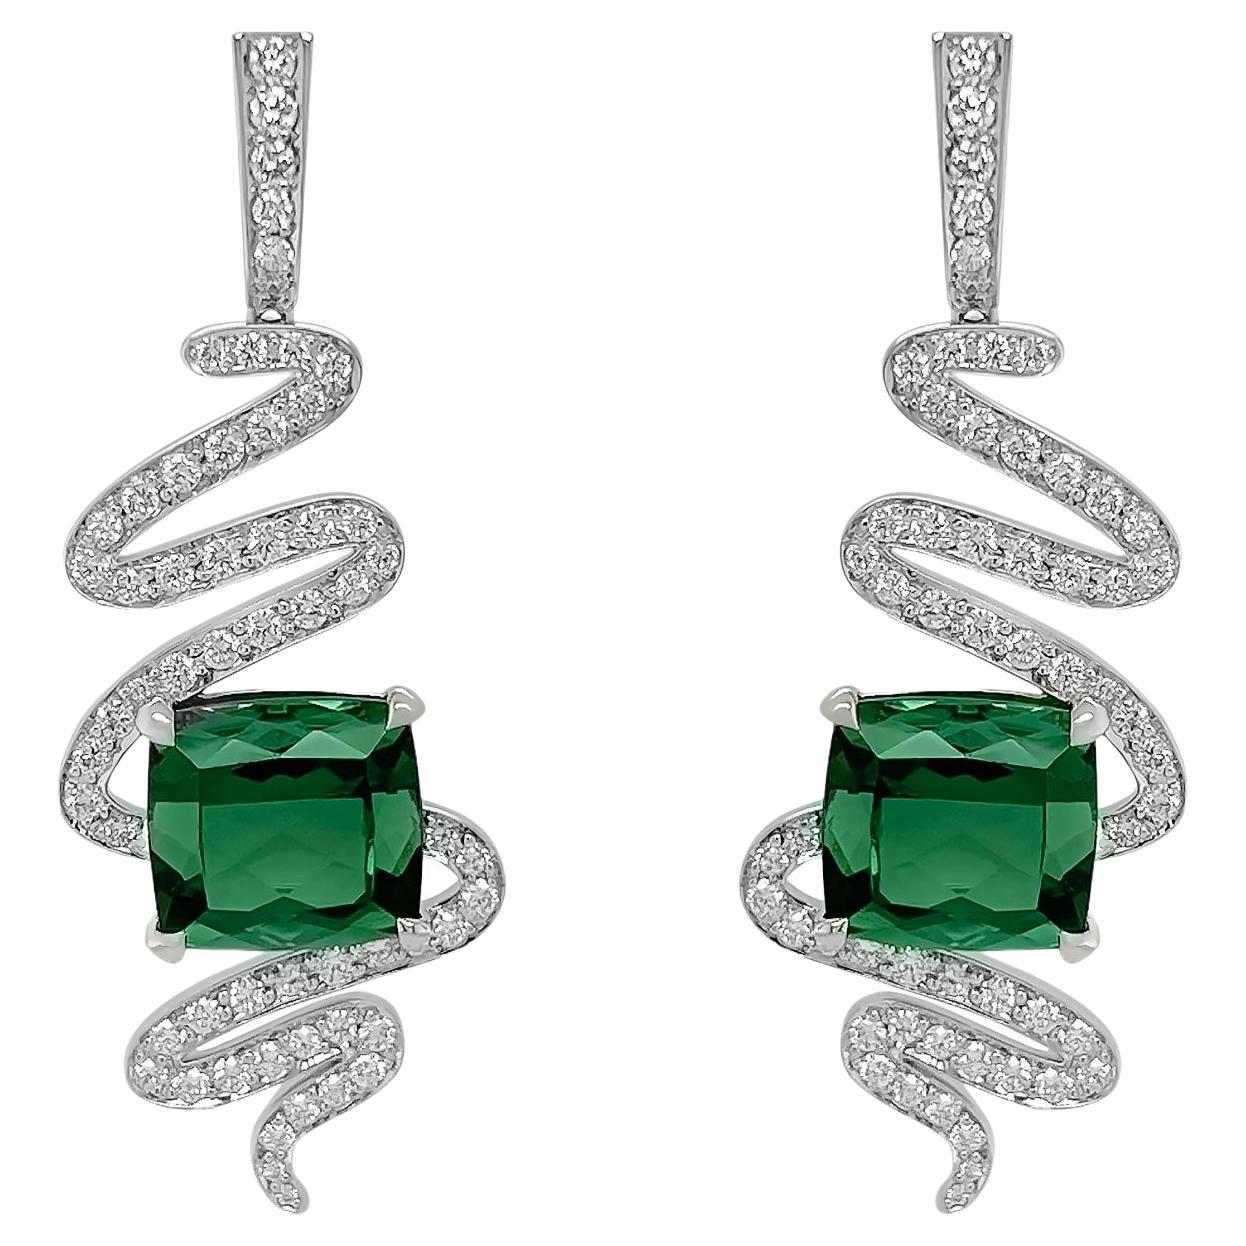 Vivid Brazilian Green Tourmaline and Diamond Spiral Earrings in 18k White Gold 